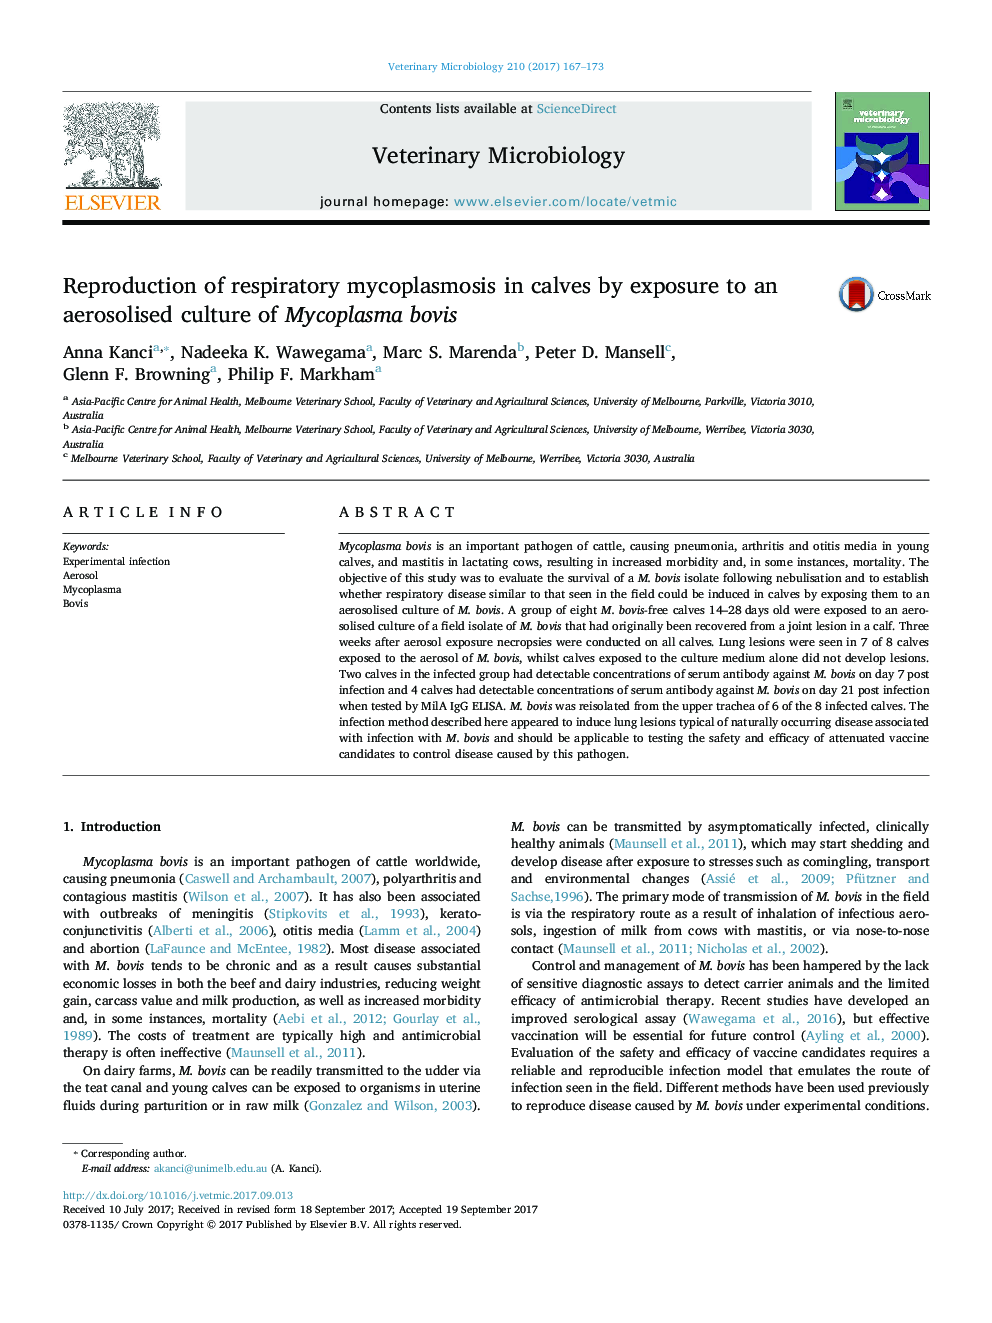 Reproduction of respiratory mycoplasmosis in calves by exposure to an aerosolised culture of Mycoplasma bovis